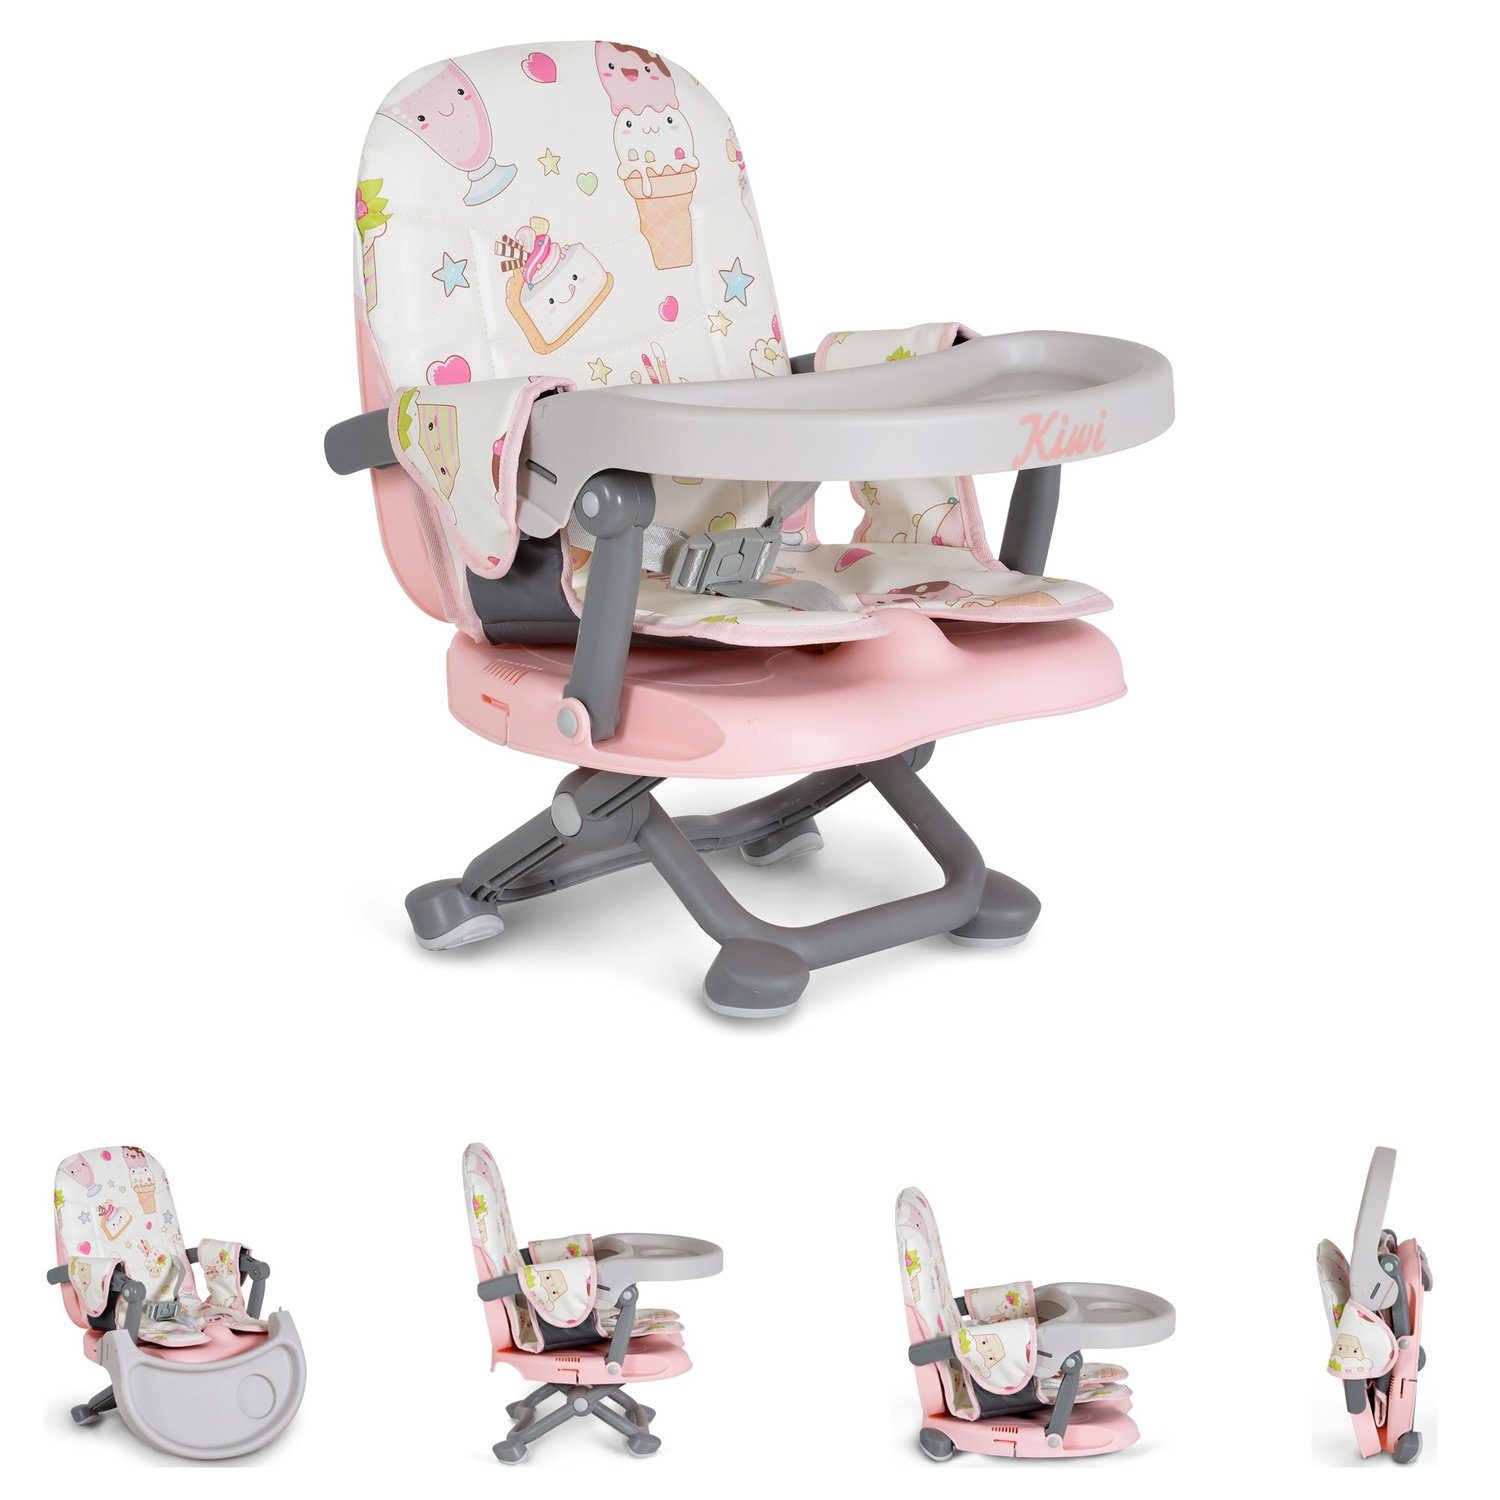 Moni Stuhl Kinderstuhl Kiwi, rosa Boostersitz, Stuhl-, Kuchen Tisch, klappbar Sitzerhöhung, Kinder